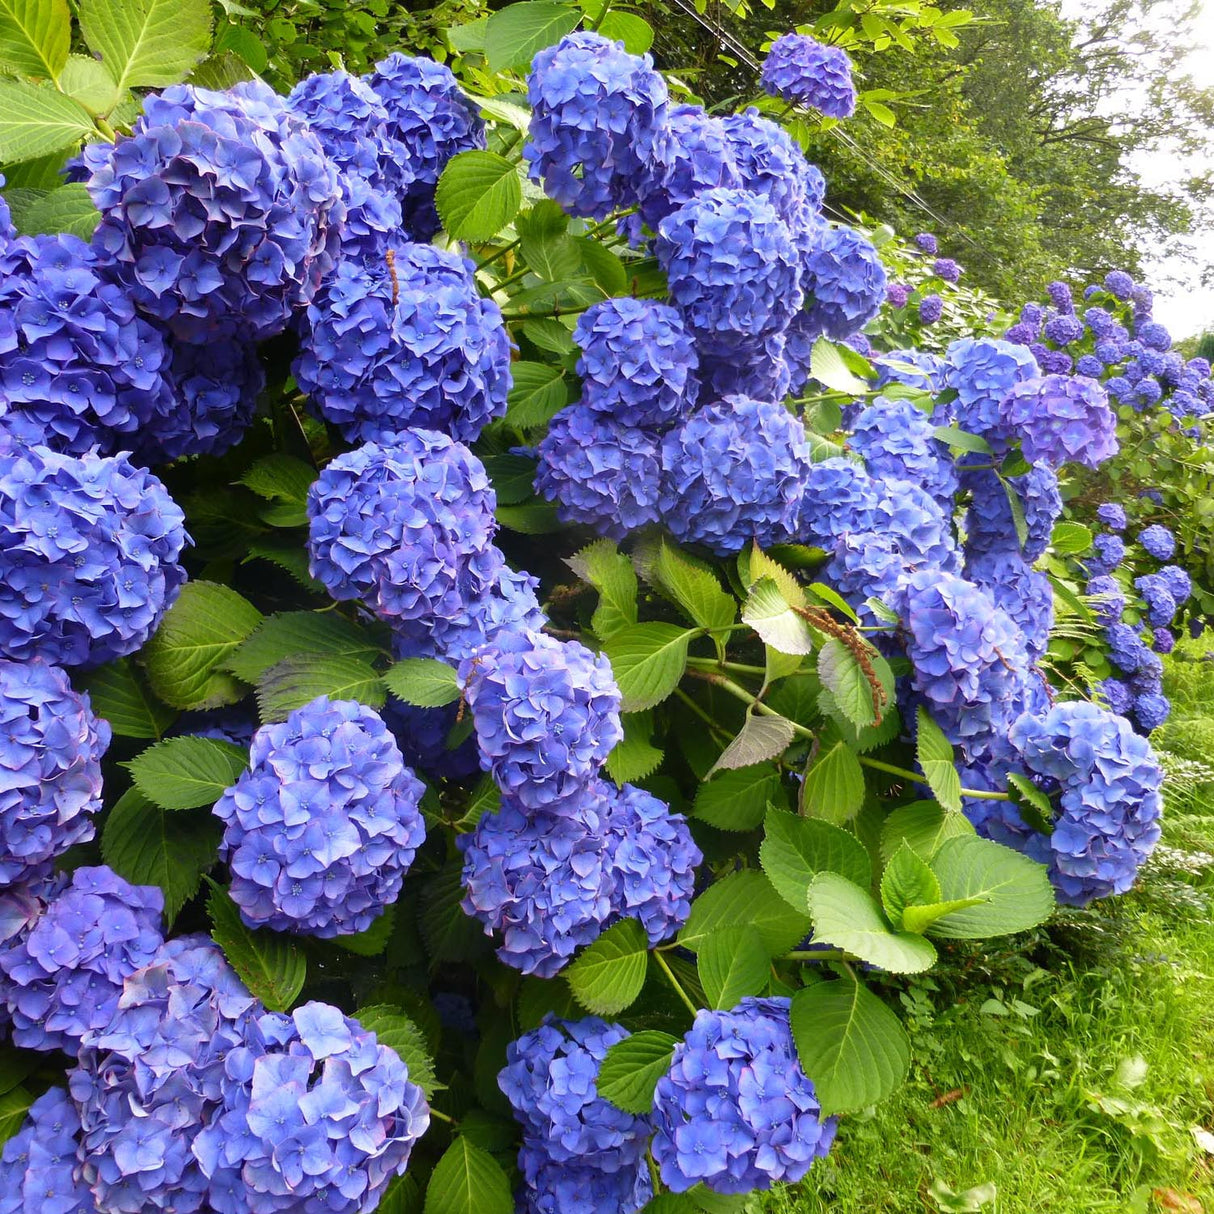 Hortensia Endless Summer albastru, 15-25 cm inaltime in ghiveci de 5L